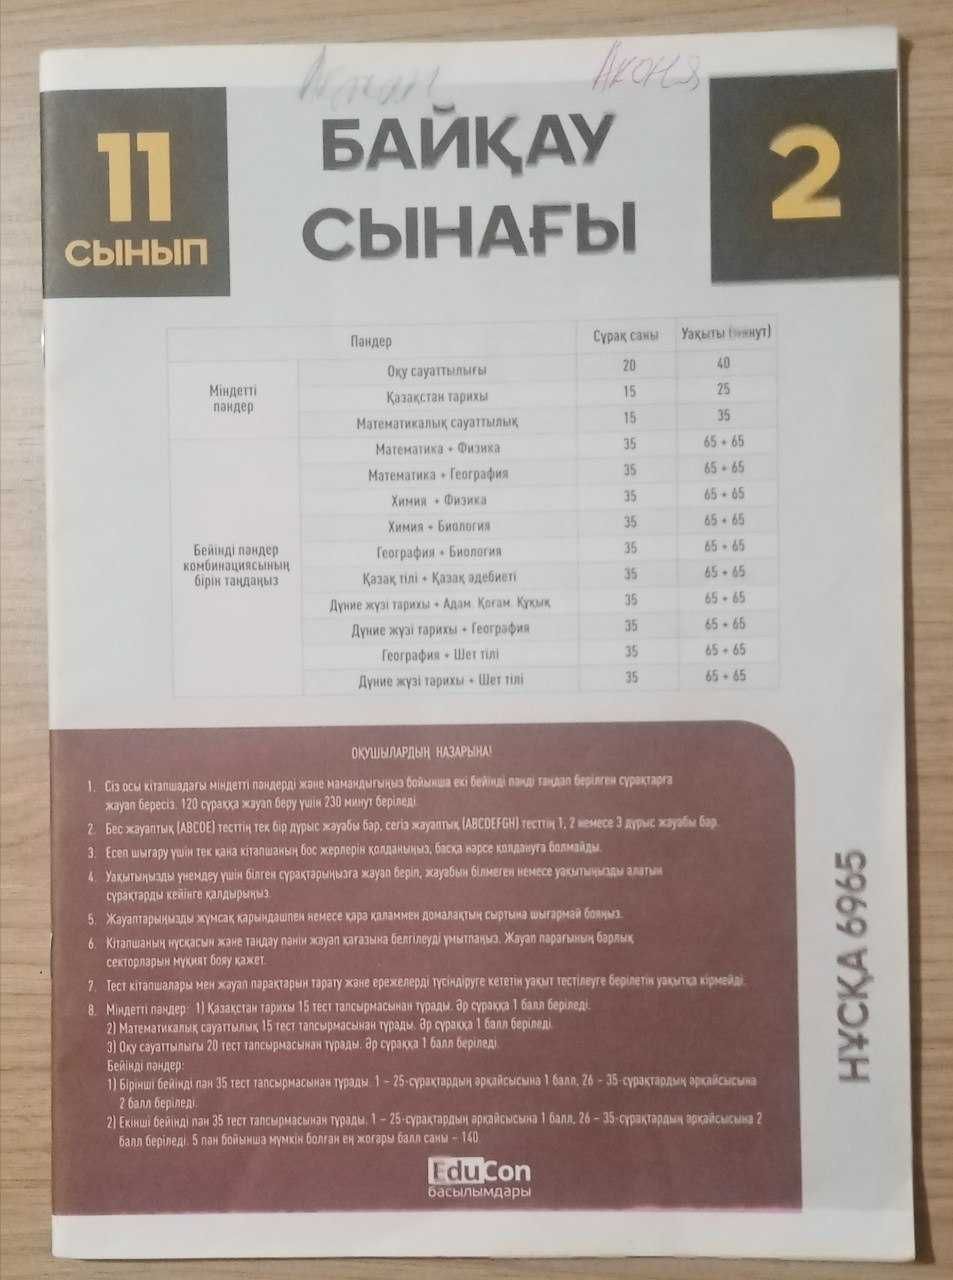 Тесты 11-го класса на казахском языке. Байкау сынагы.